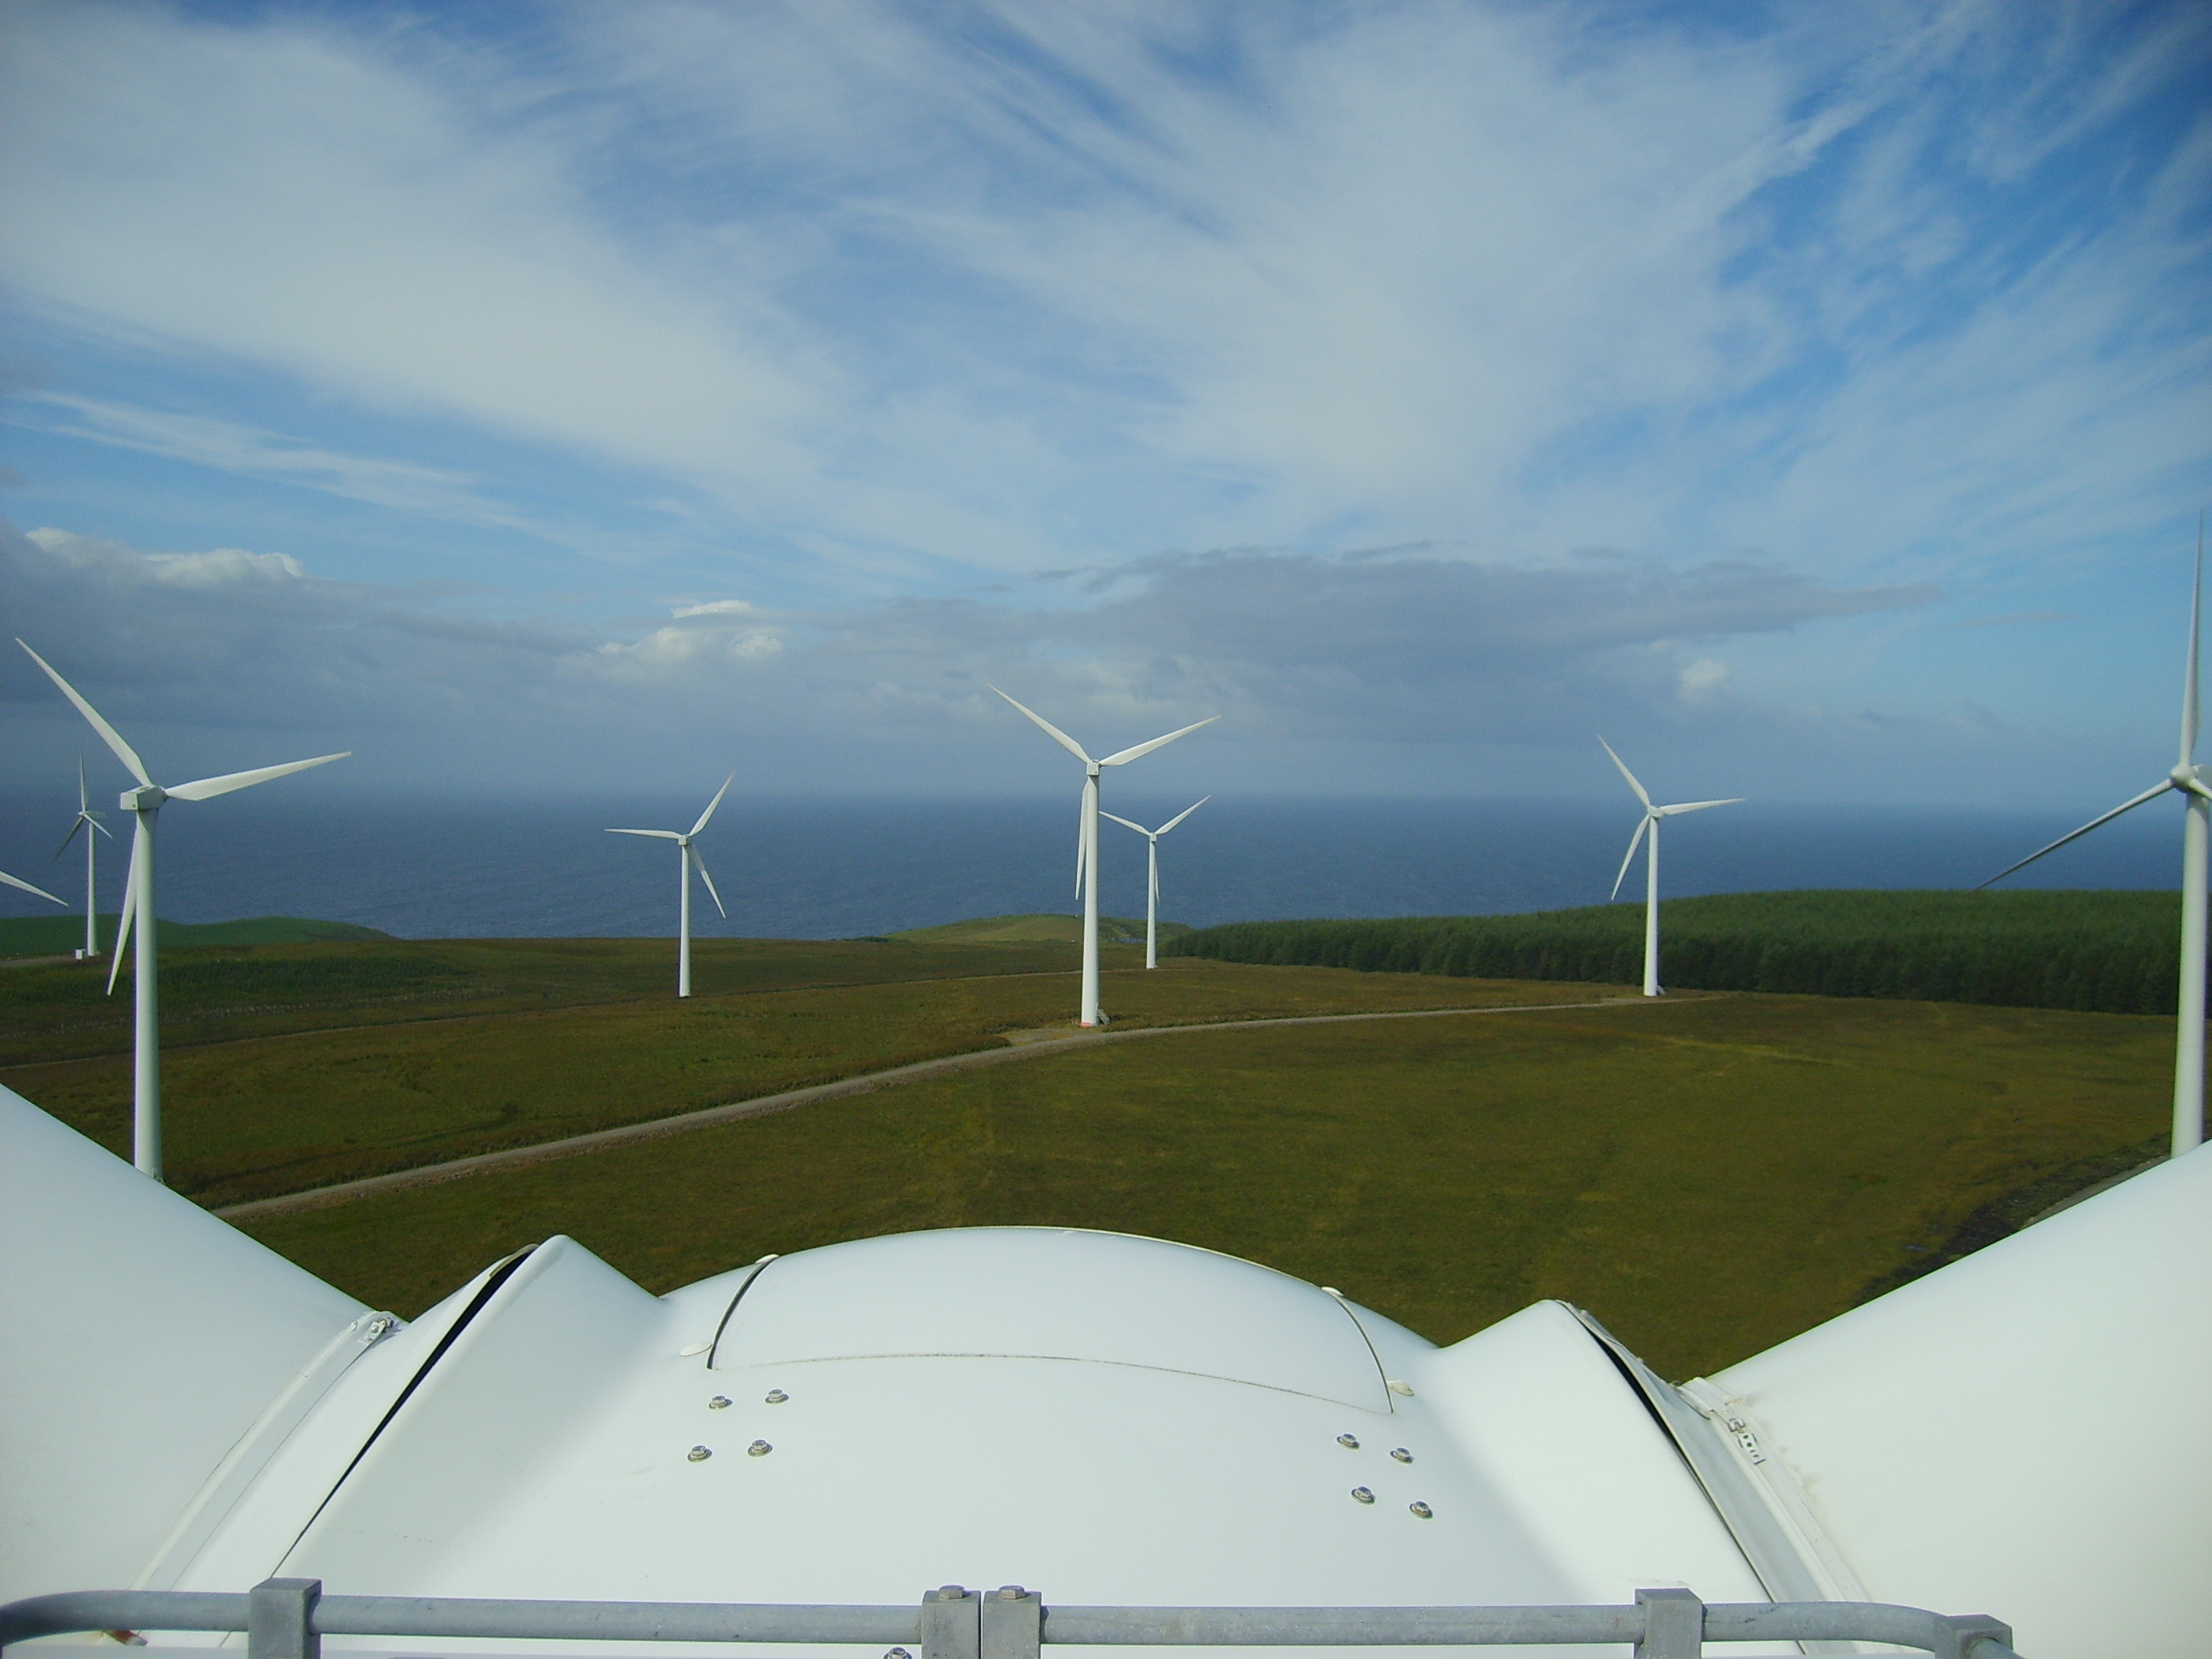 View of windfarm from atop a wind turbine hub.